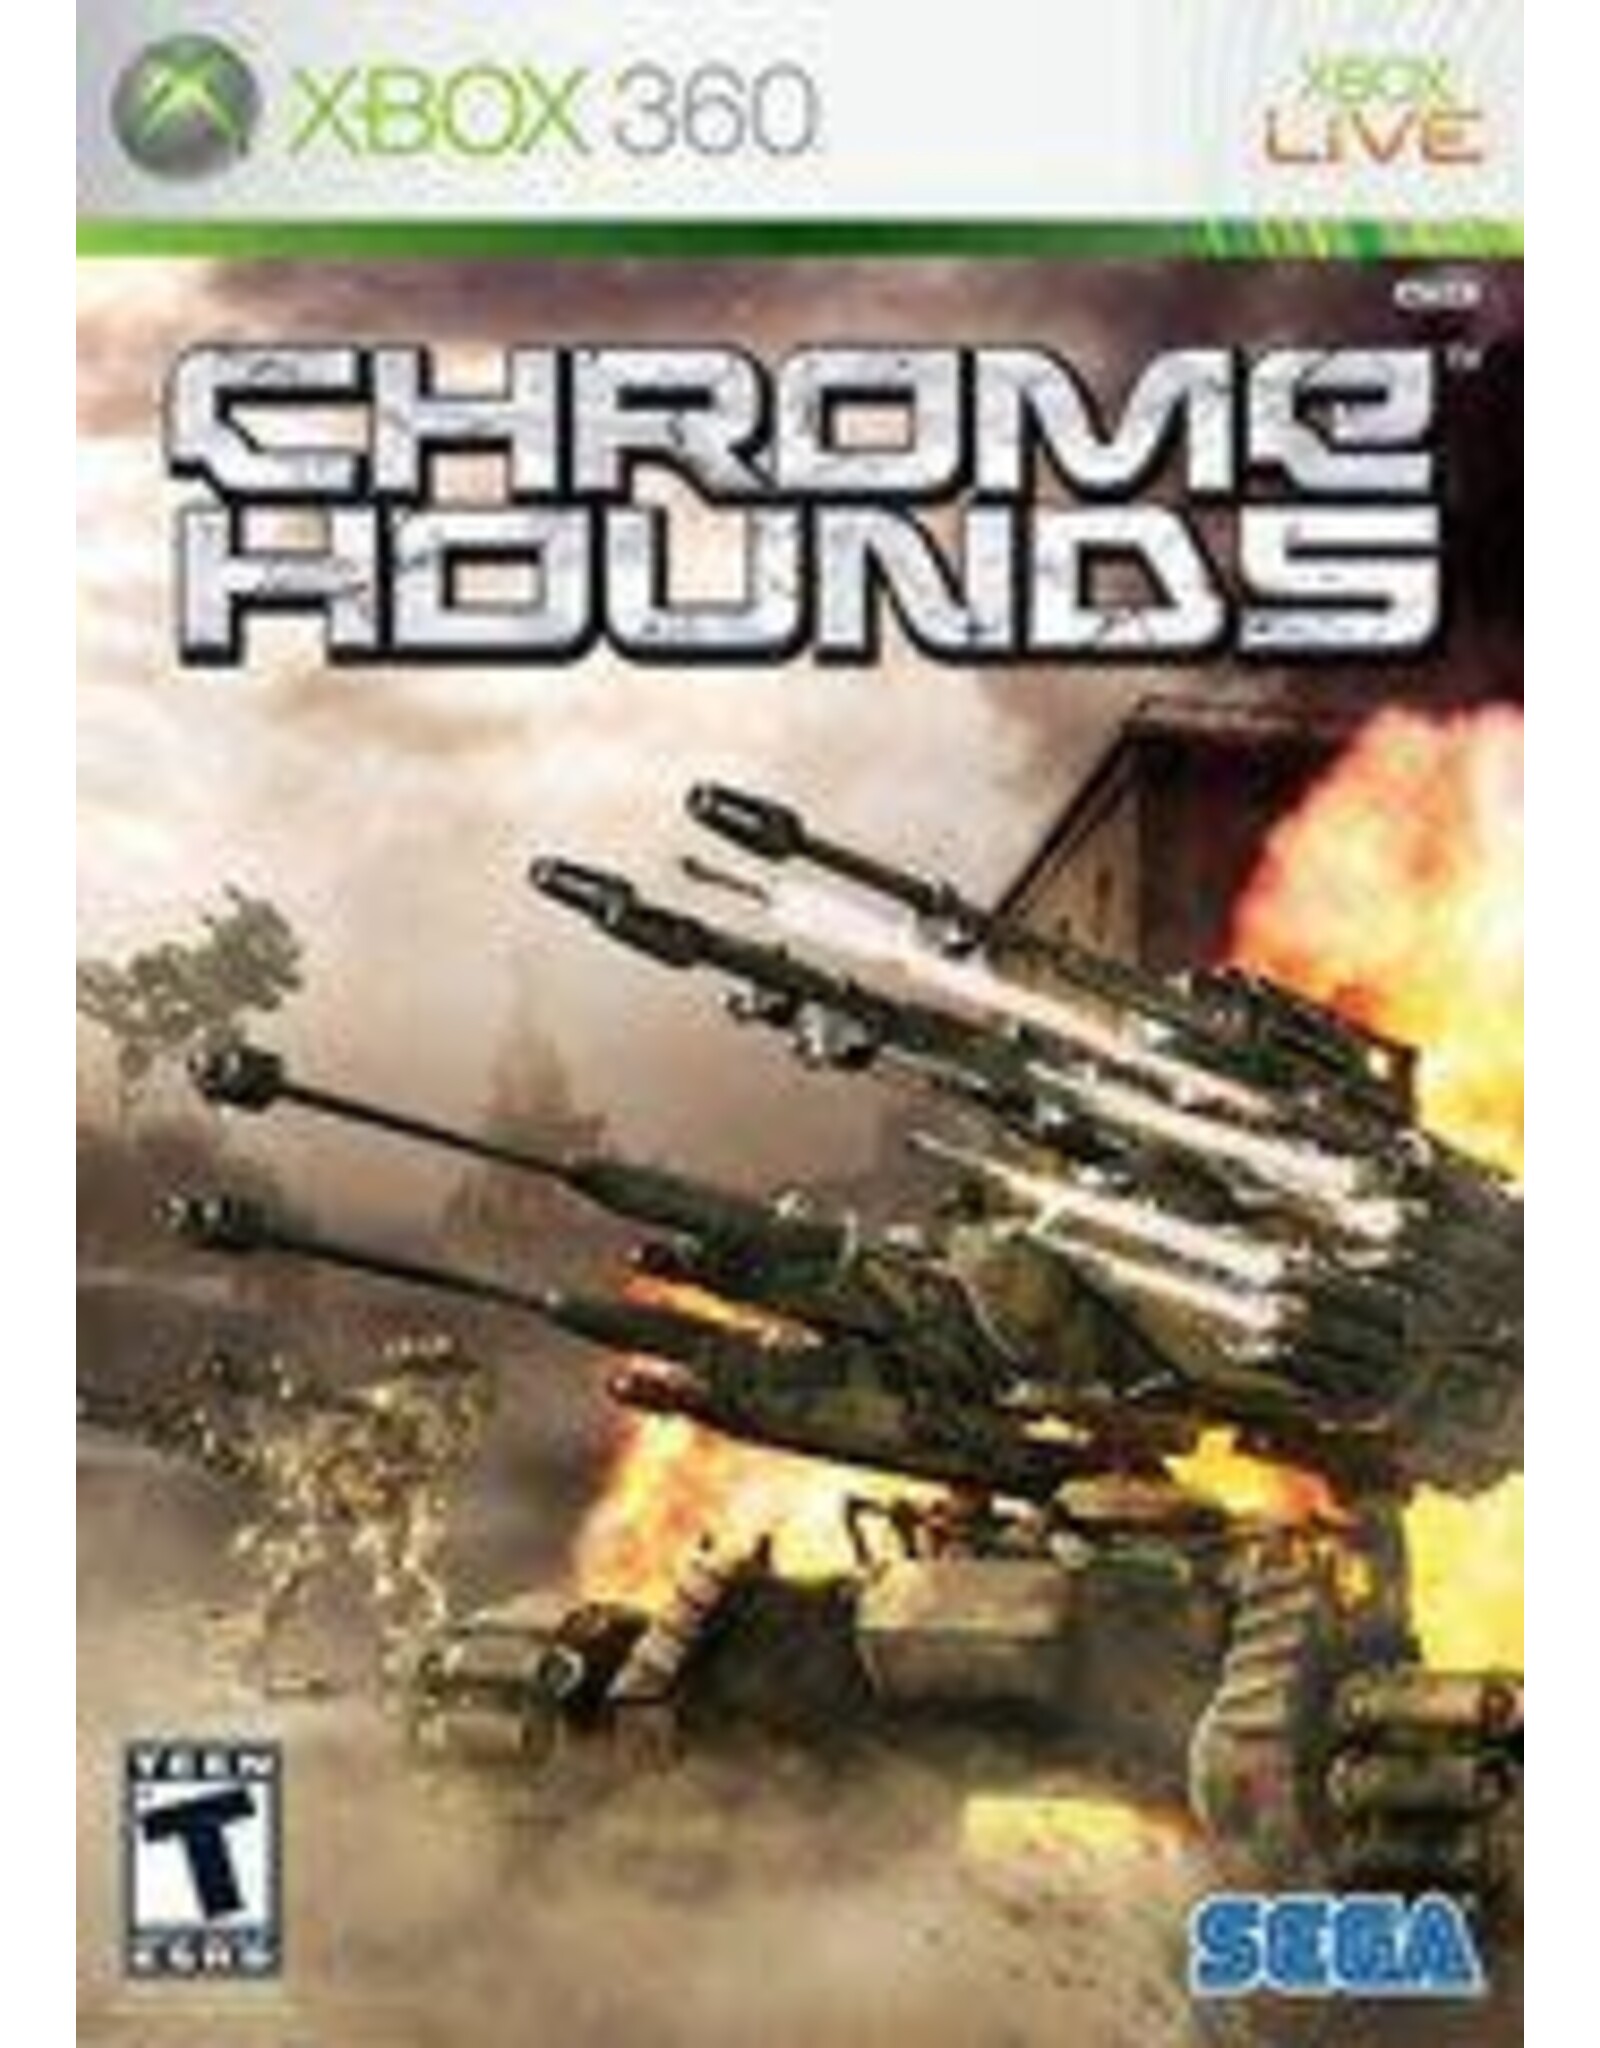 Xbox 360 Chrome Hounds (Used)